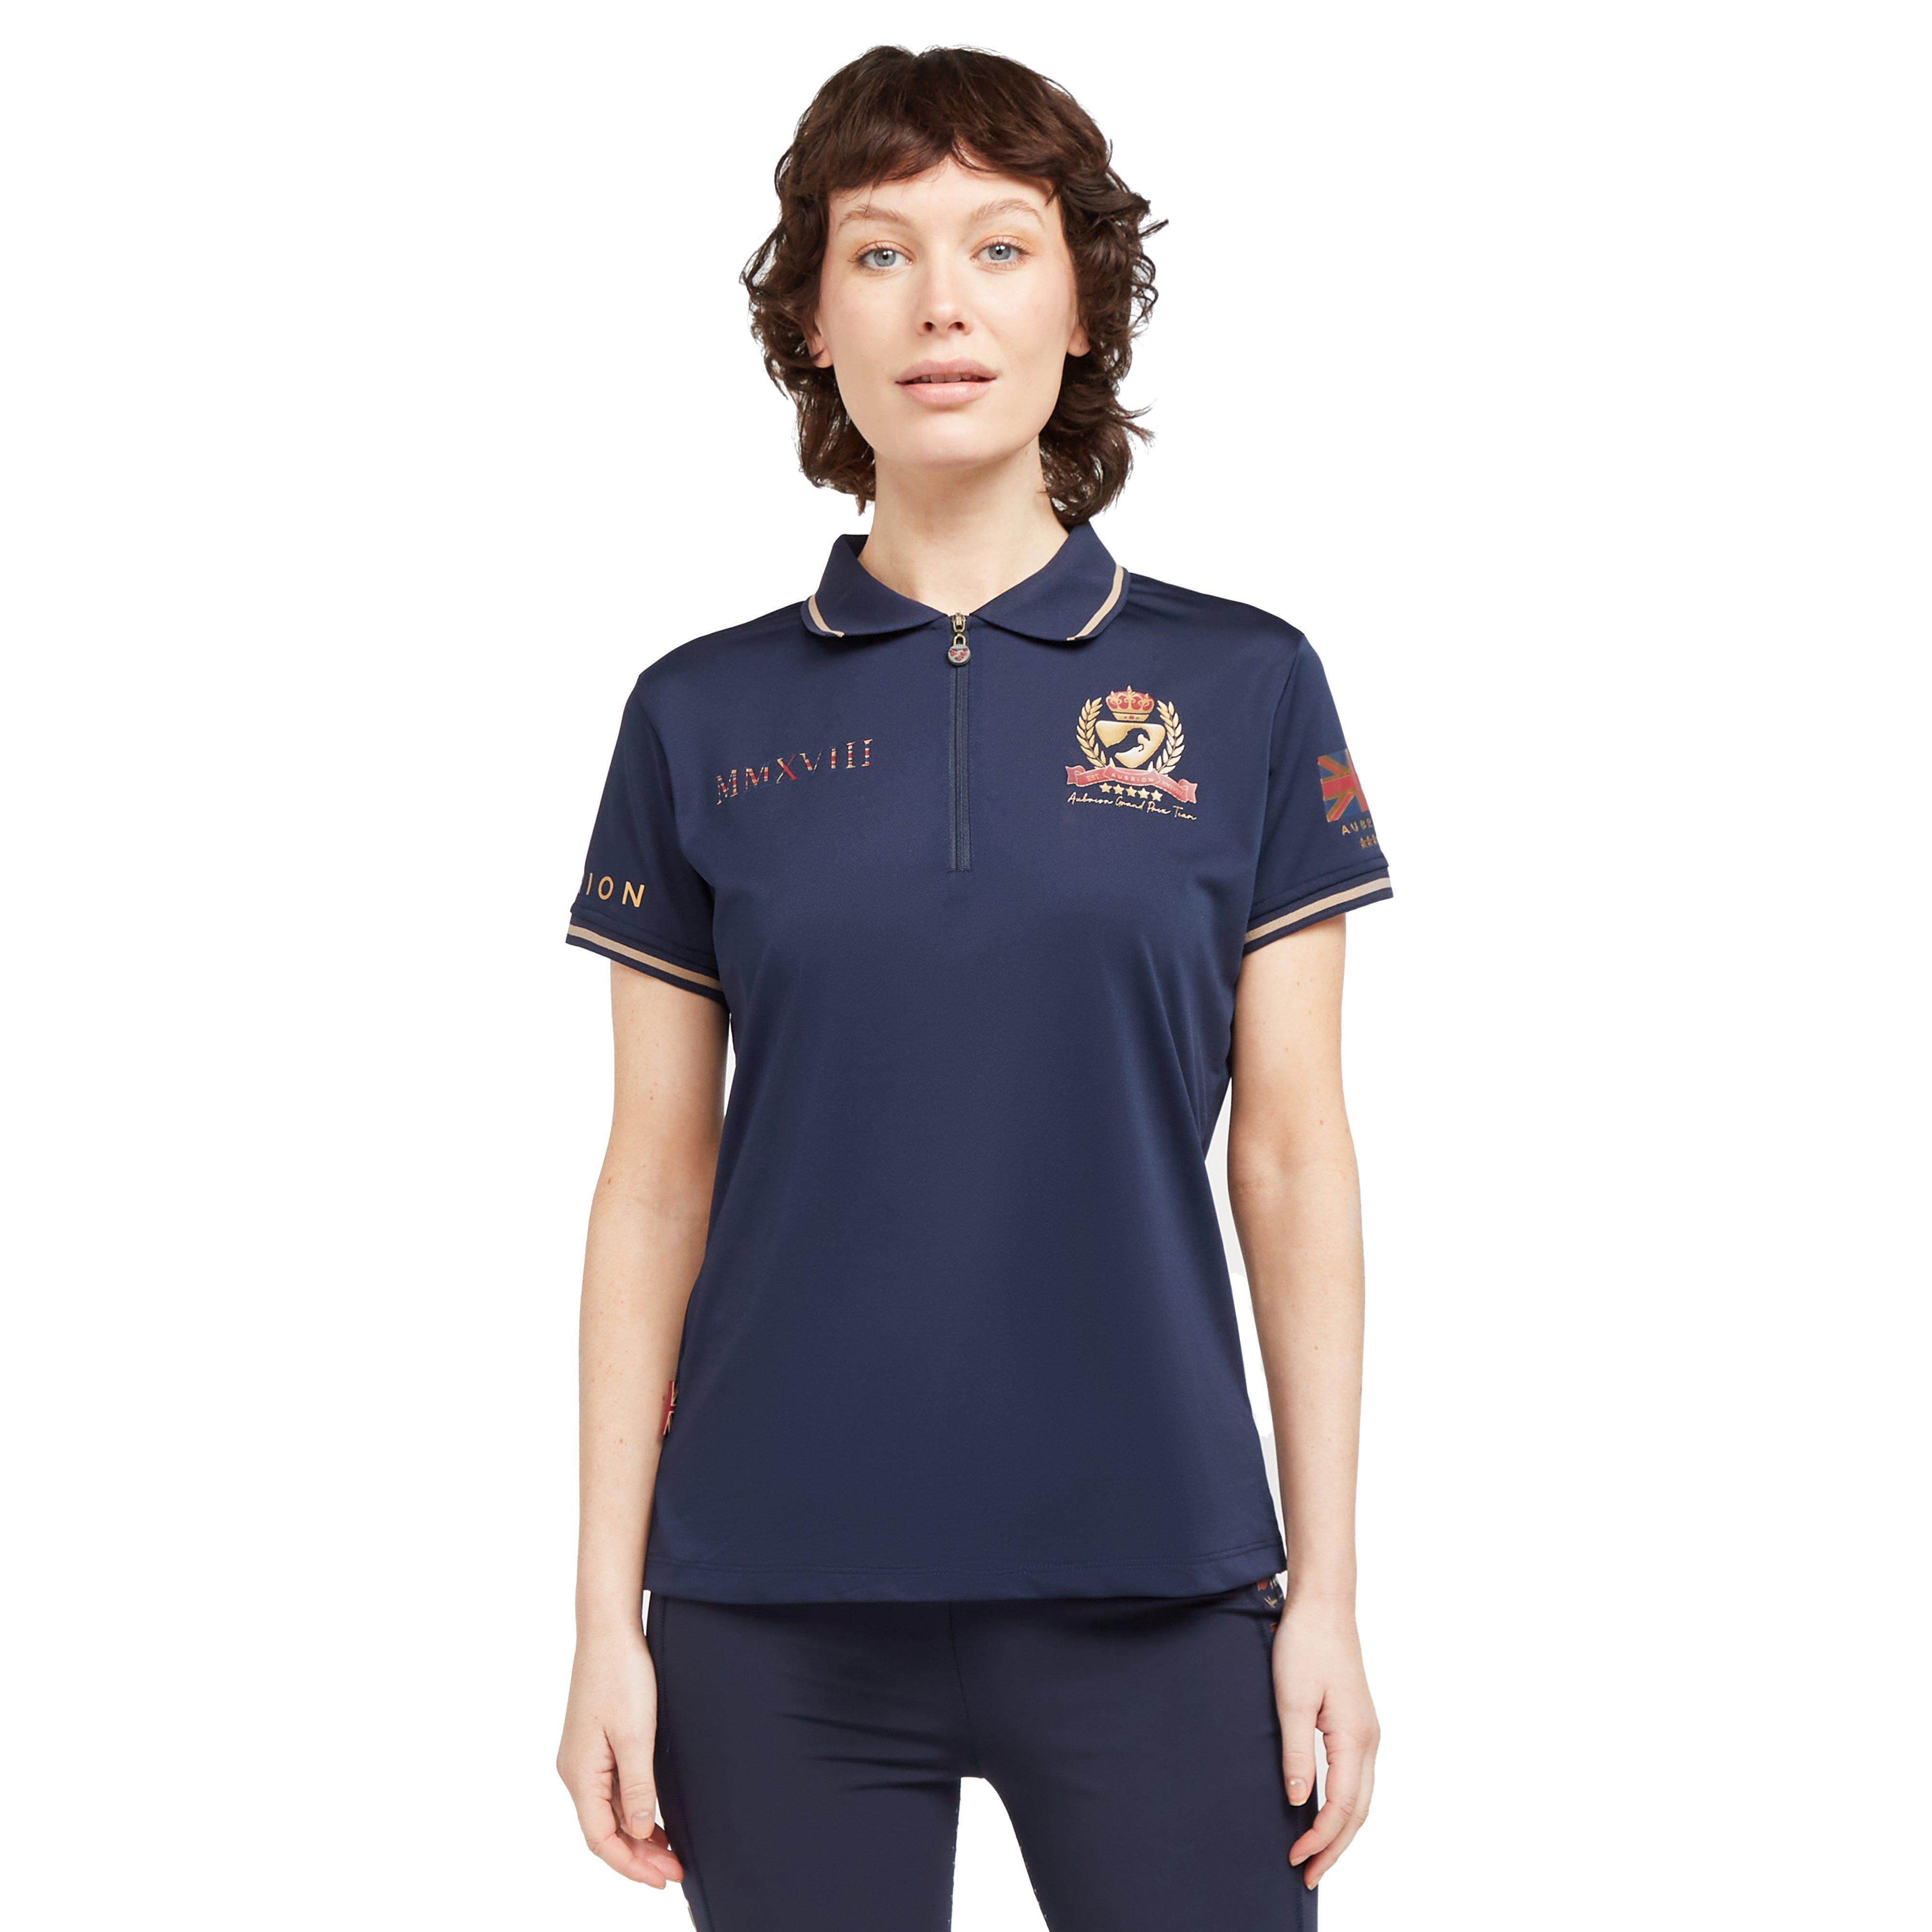 Womens Team Tech Polo Shirt Navy